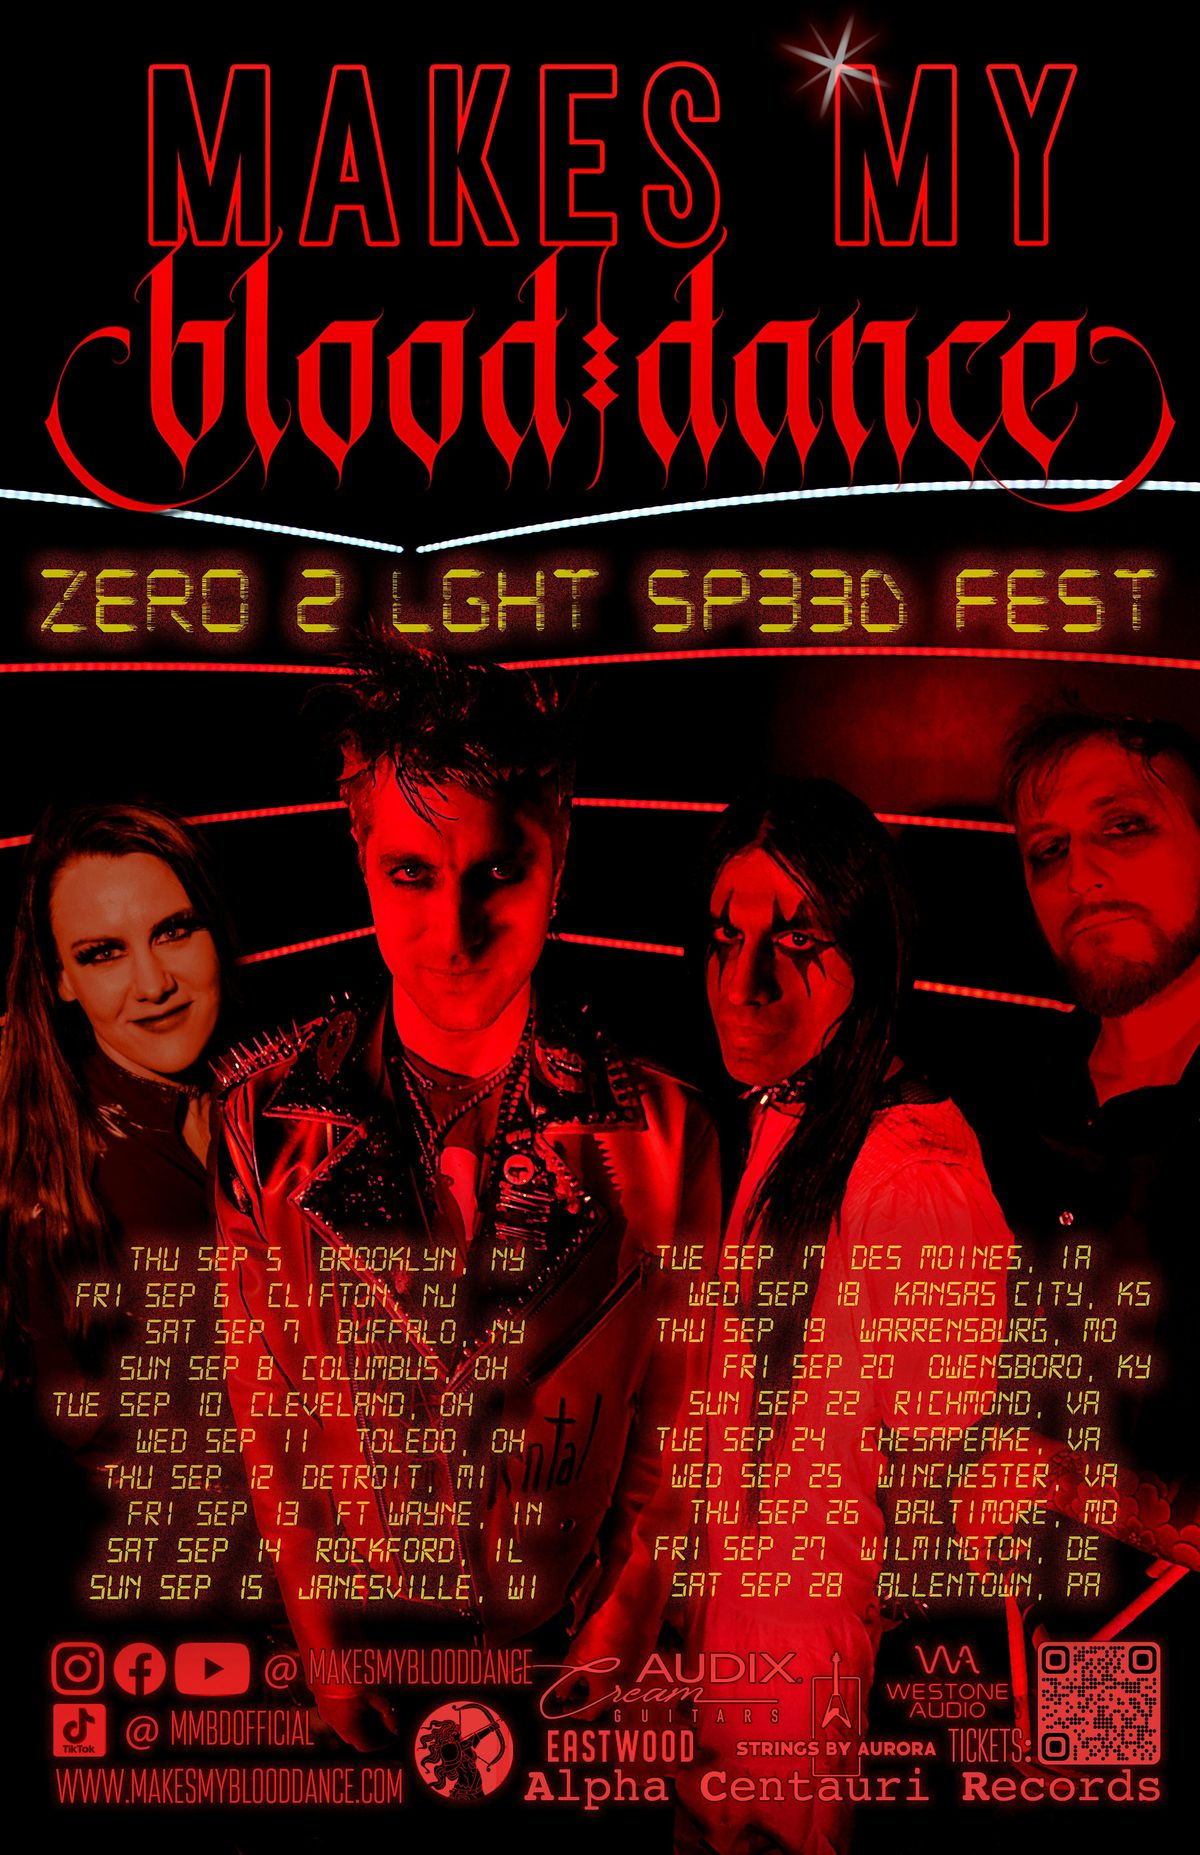 Sep22 Another Round Richmond VA Makes My Blood Dance ZER0 2 LGHT SP33D Fest